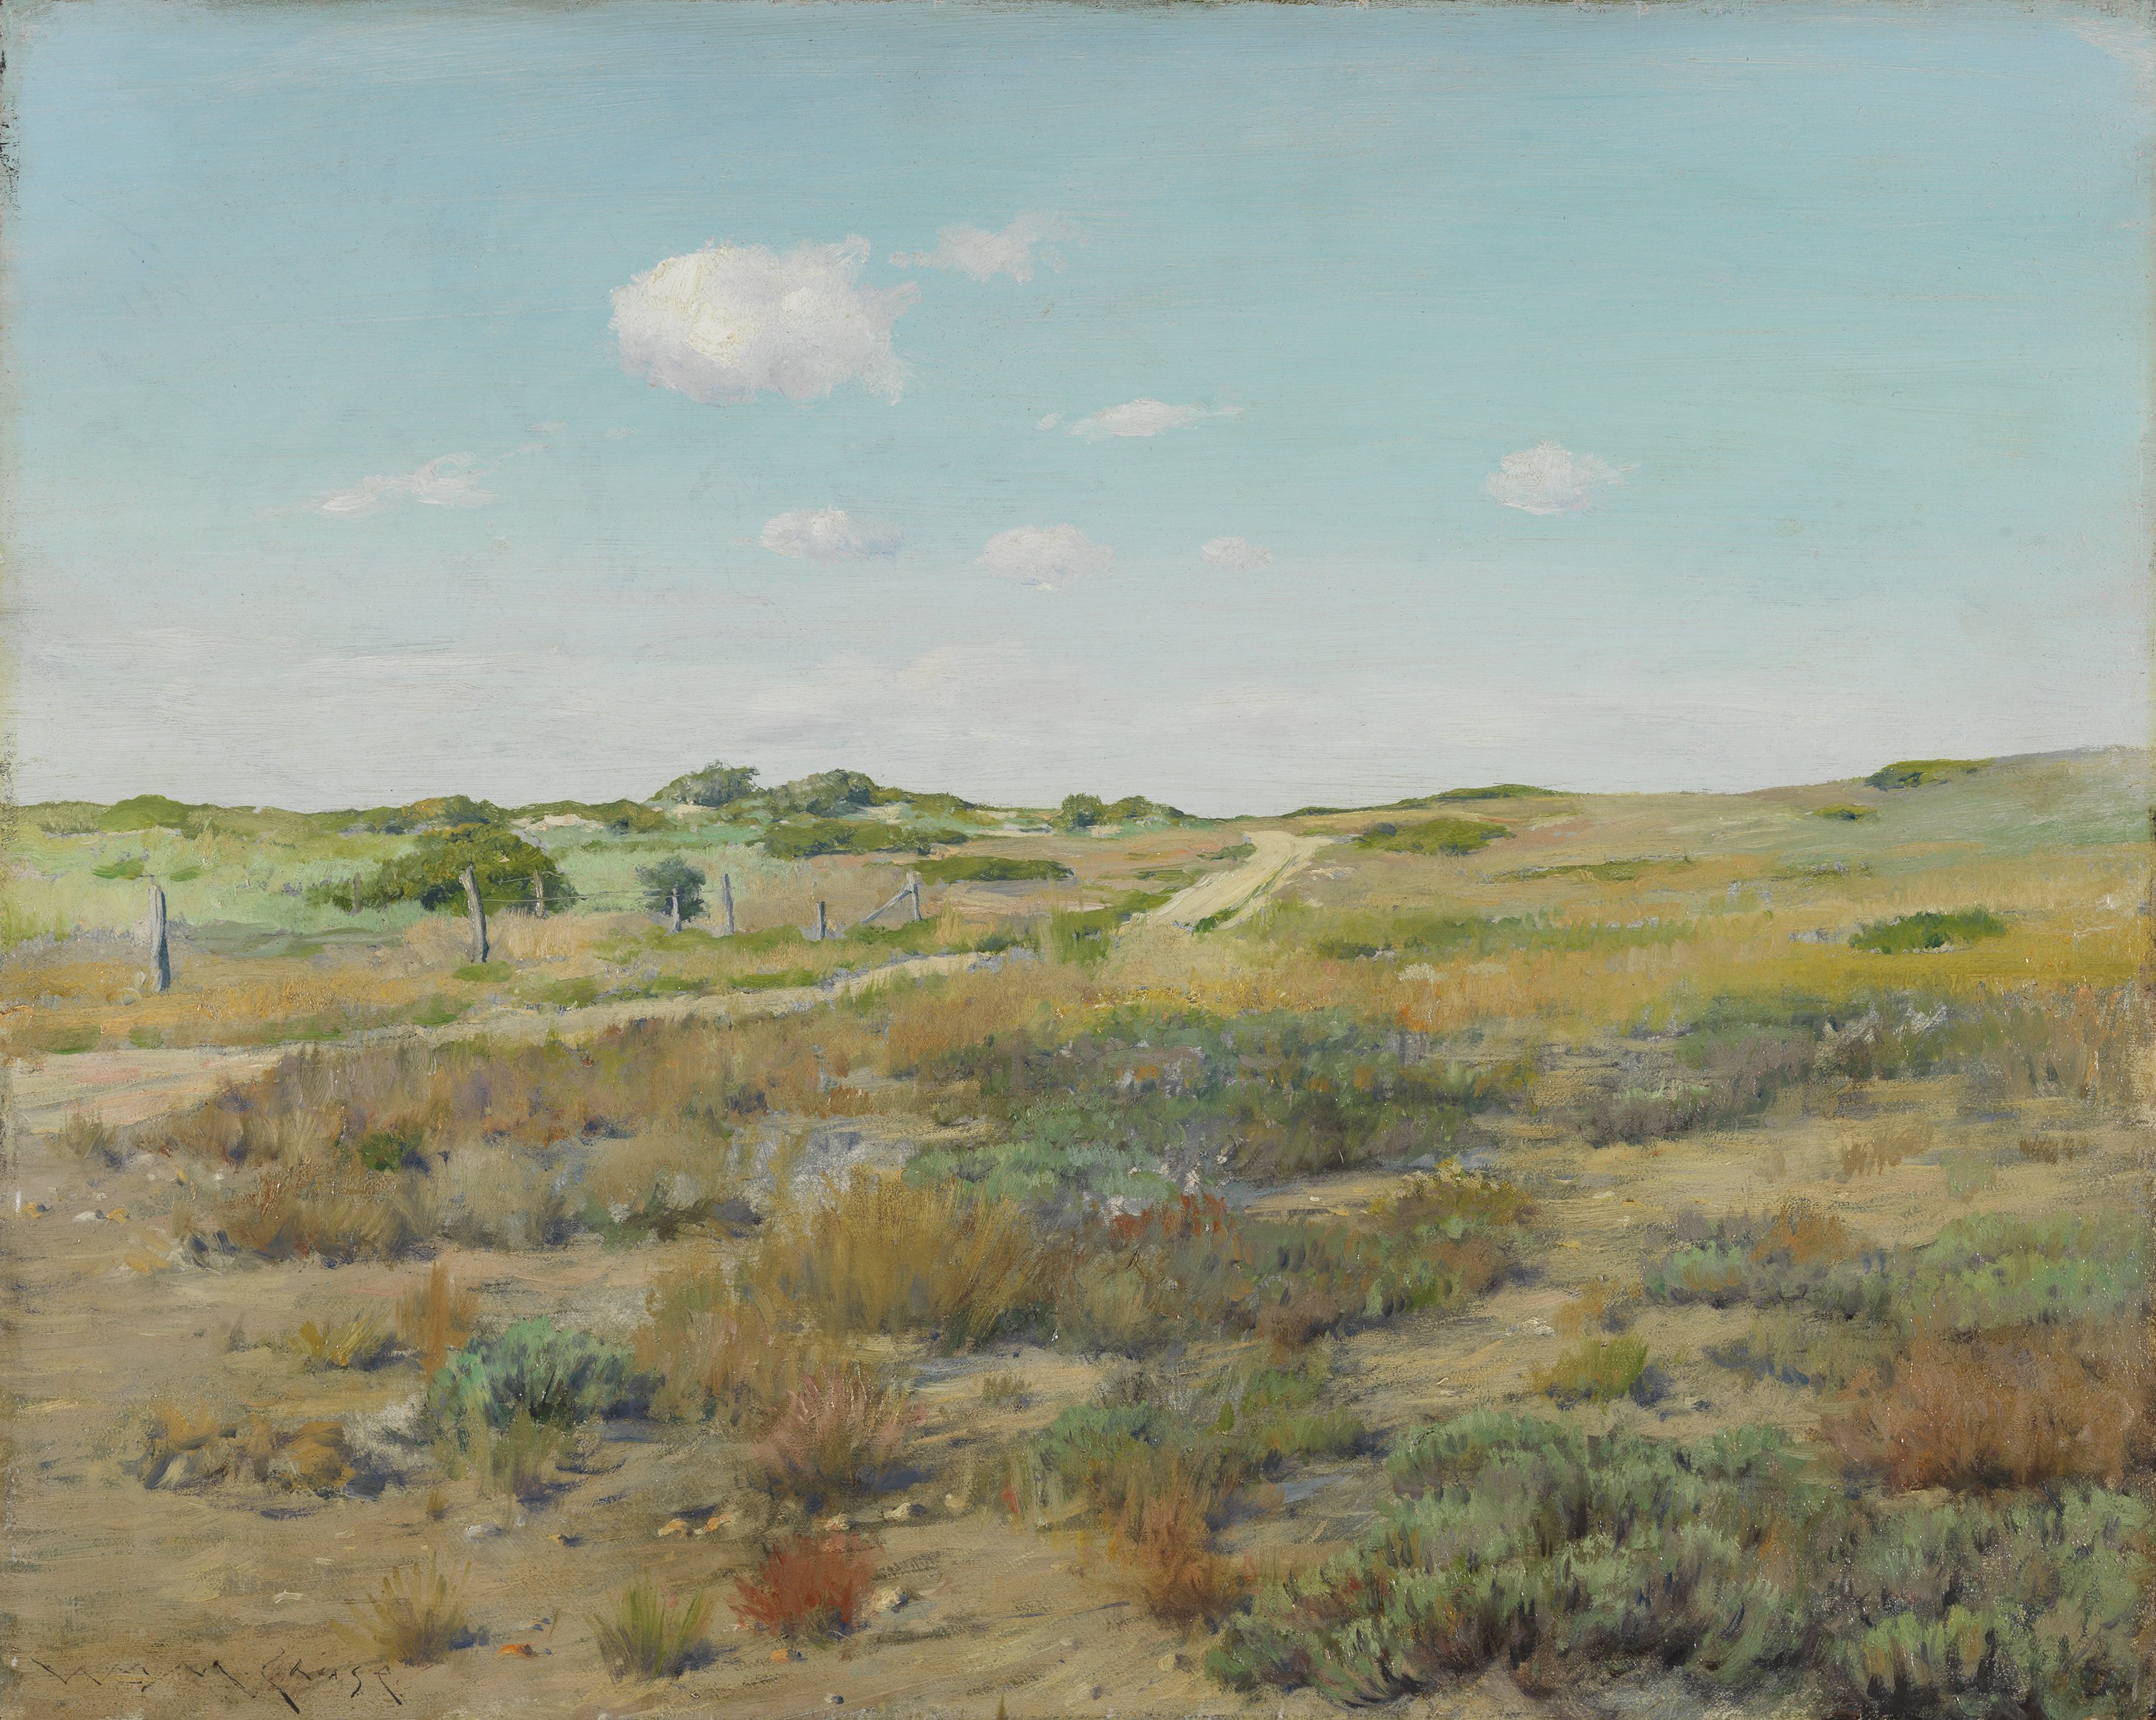 Las colinas de Shinnecock. William Merritt Chase